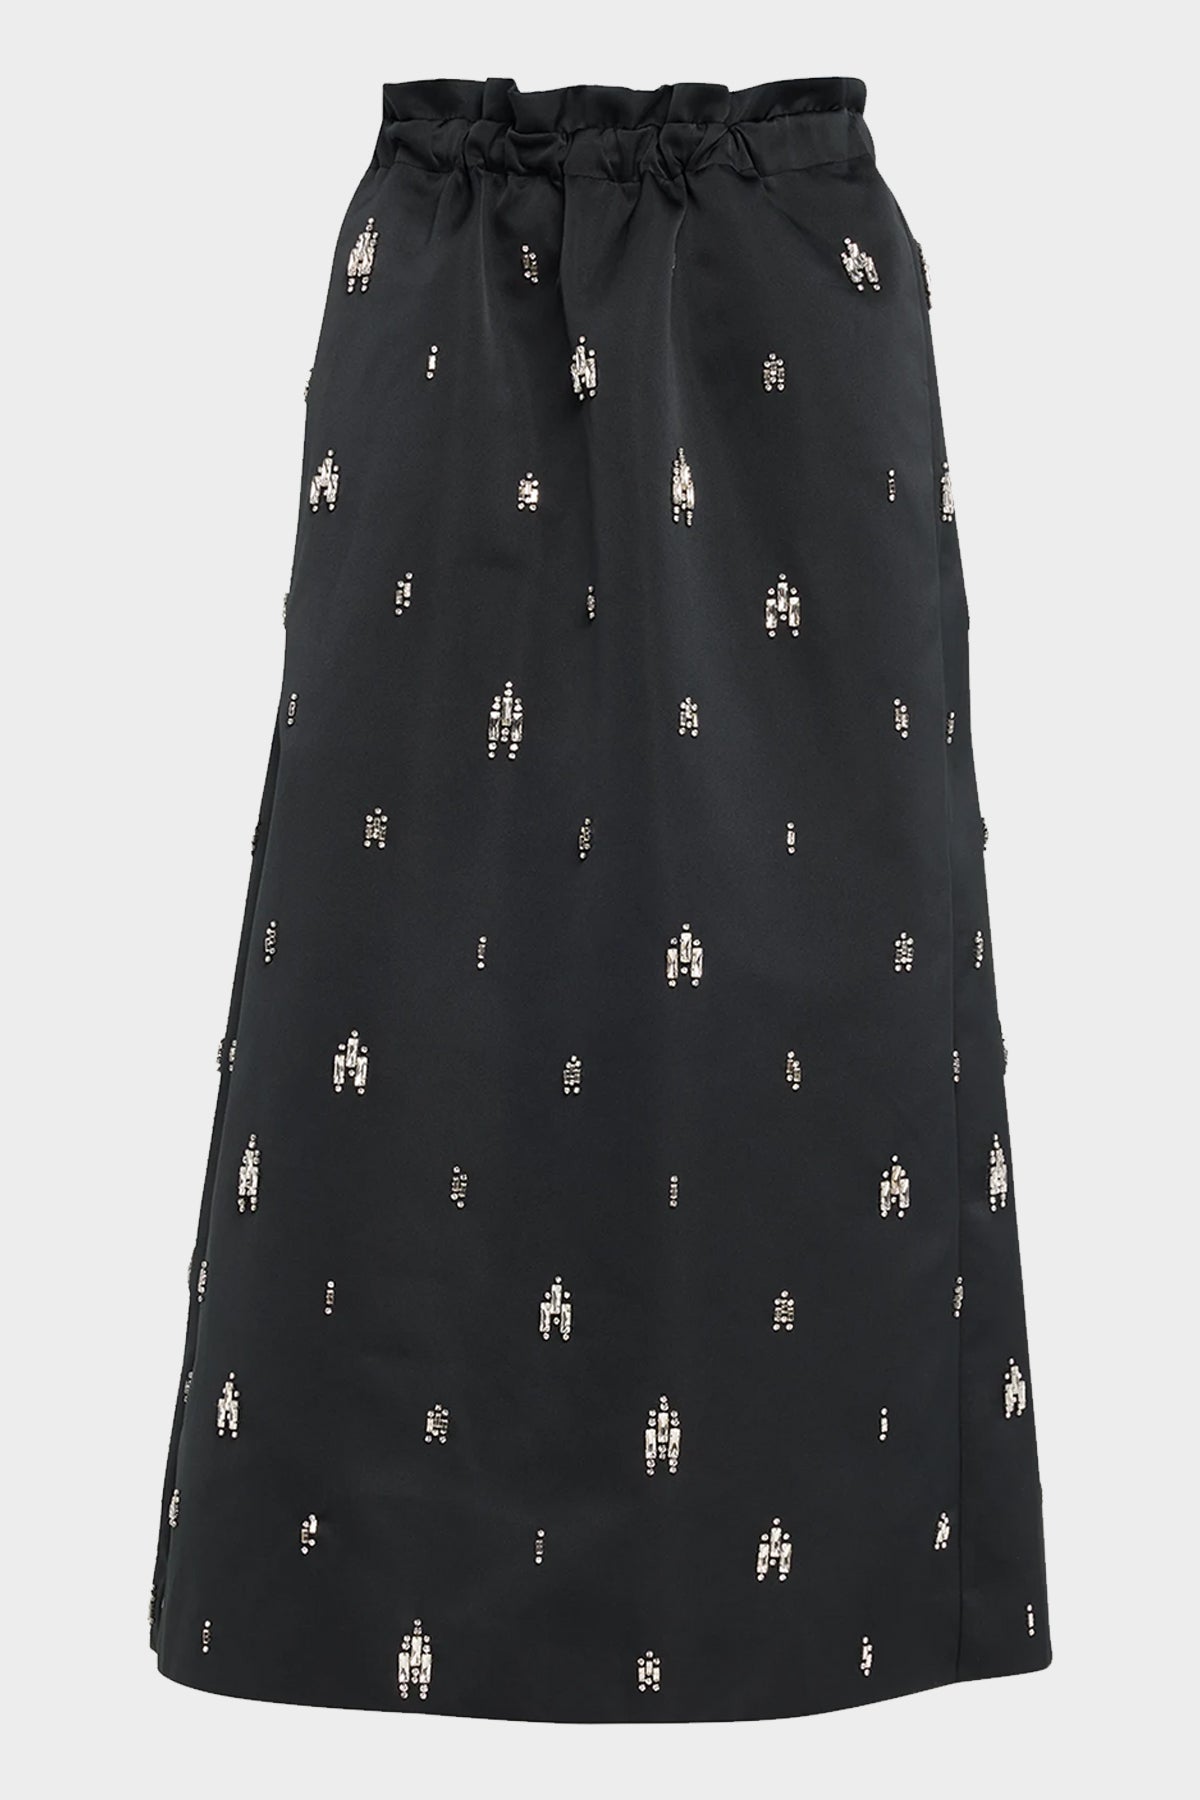 Alexia Embellished Midi Skirt in Black - shop-olivia.com